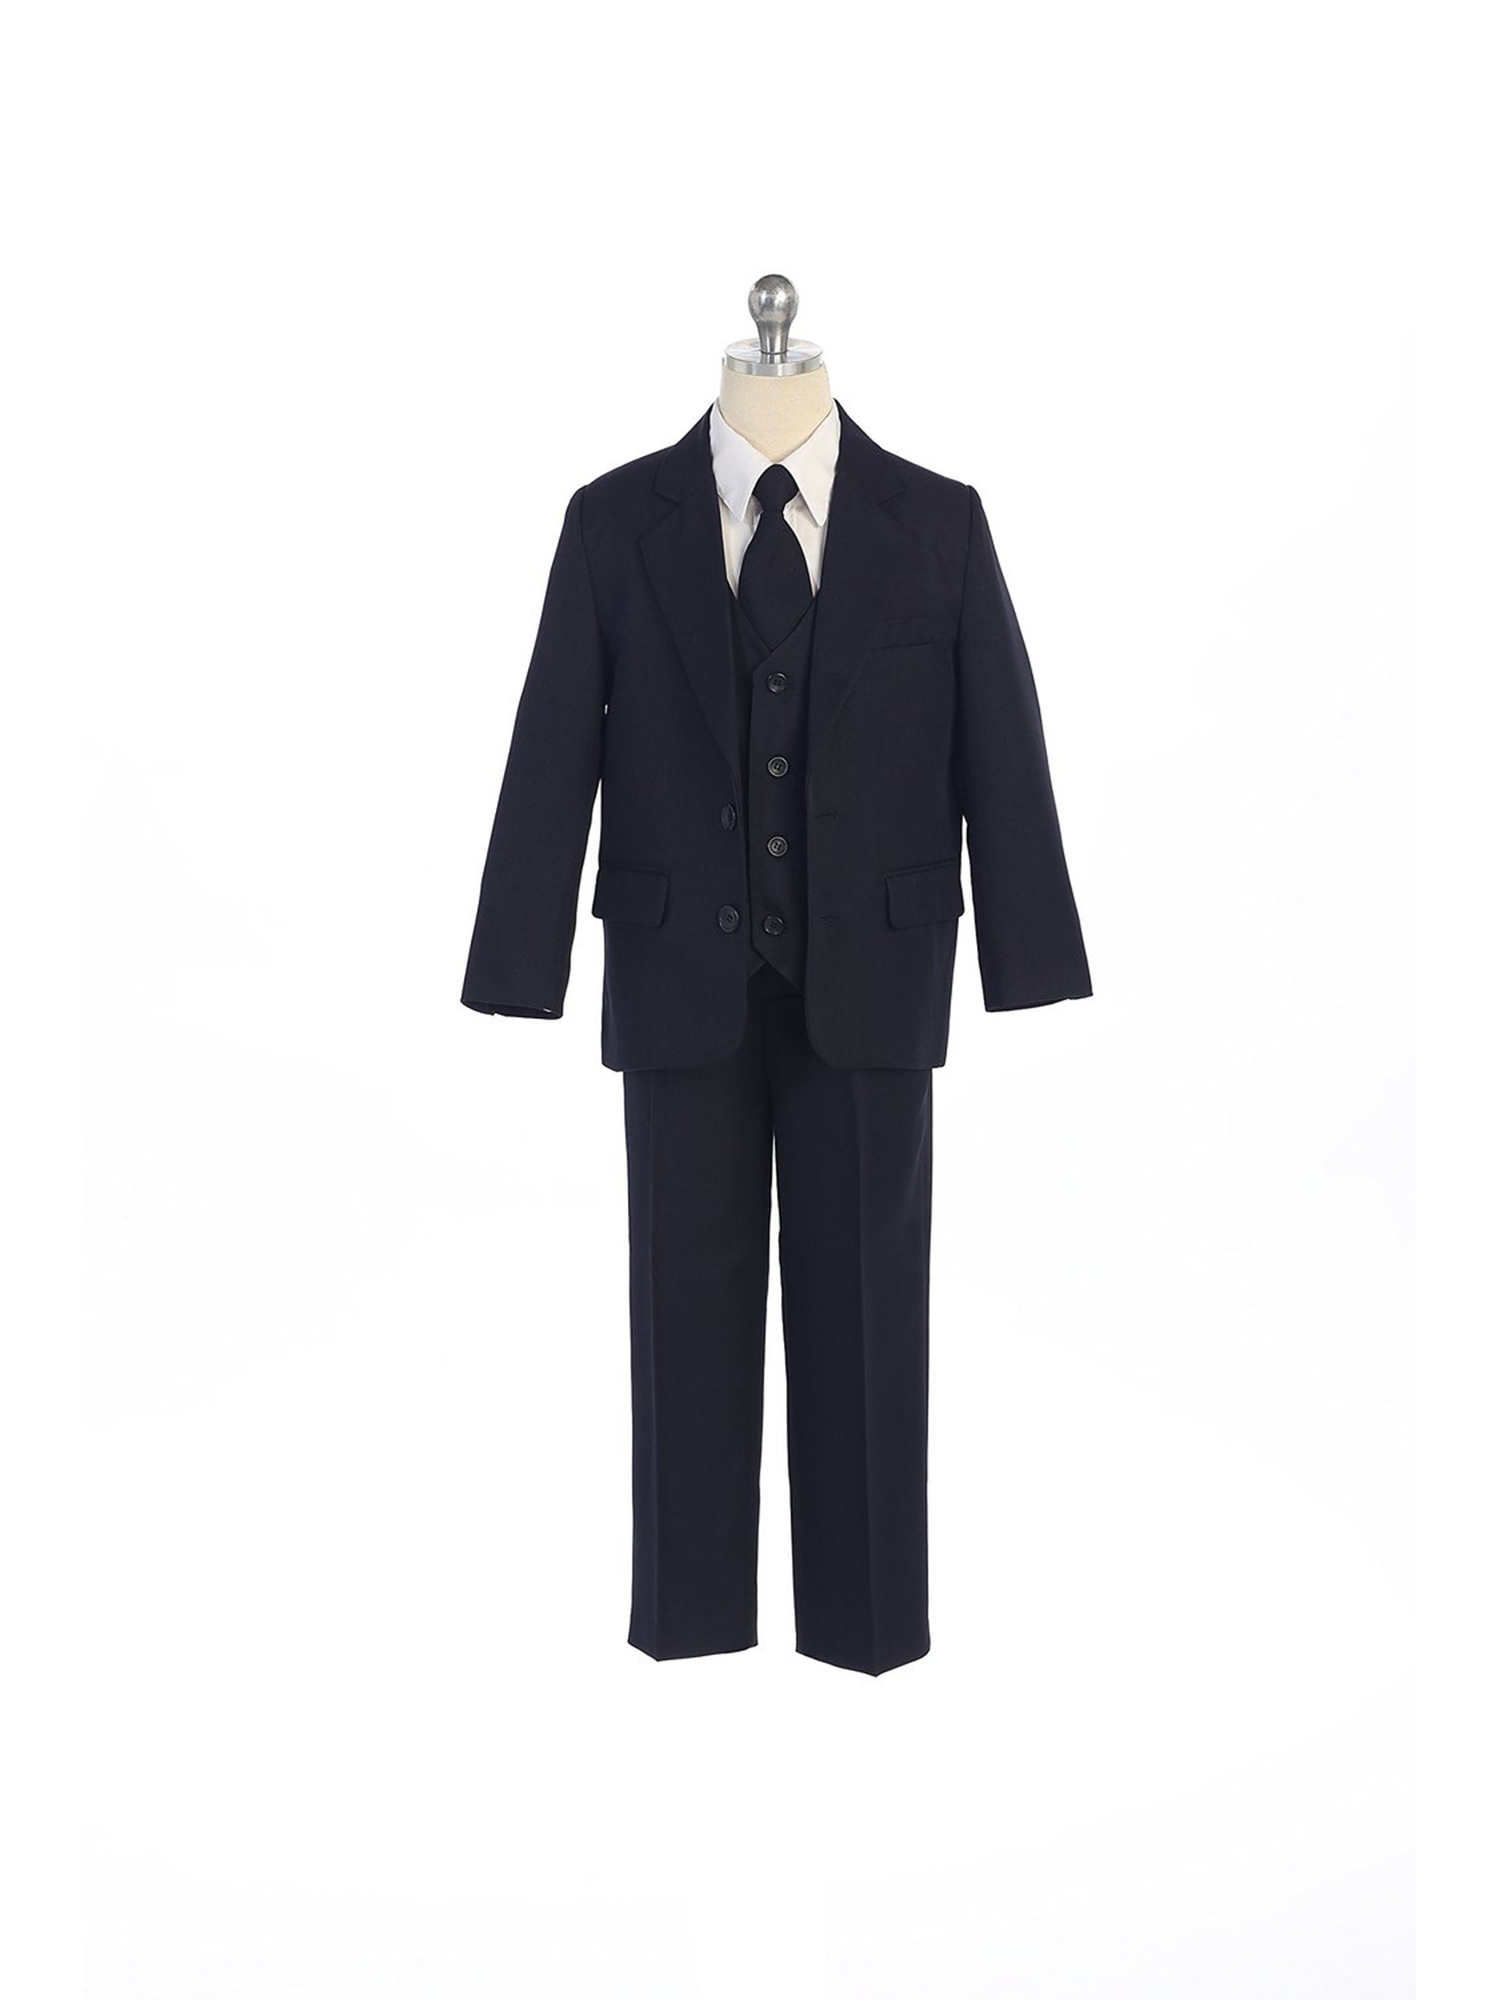 COLE Boys Suit with Shirt and Vest (5-Piece) - Navy Blue - Size 5